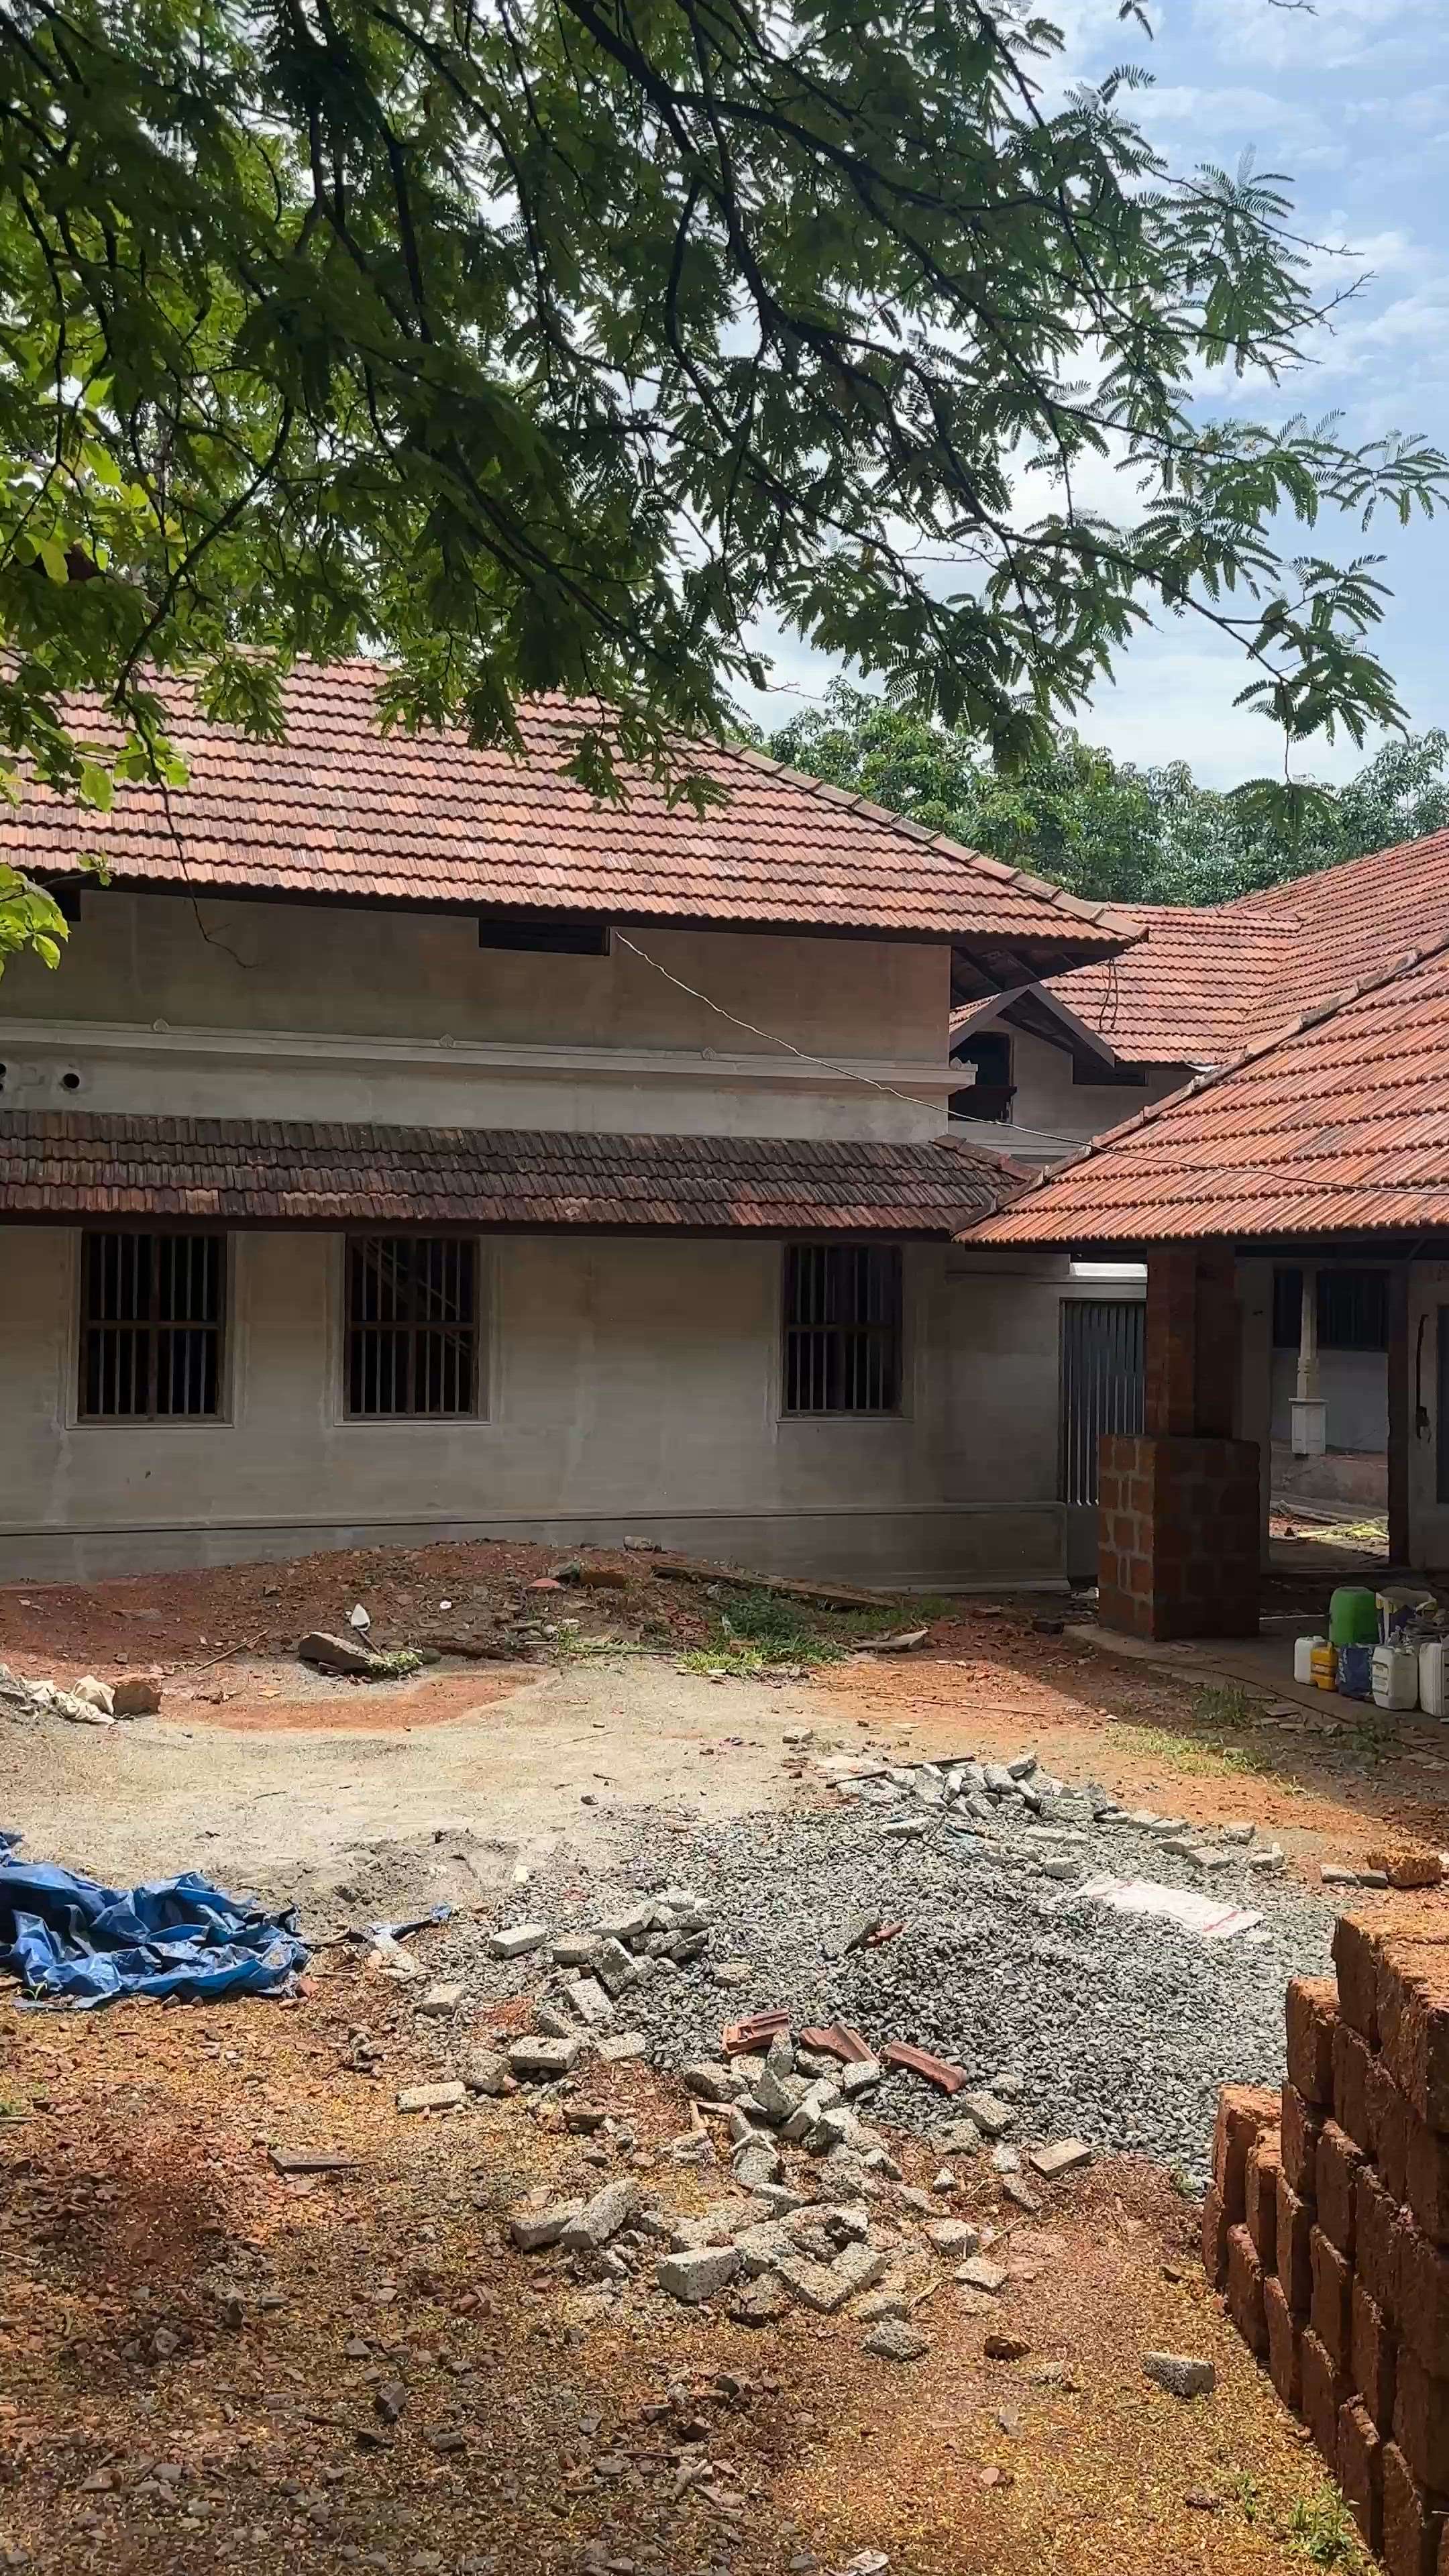 #TraditionalHouse #NALAKATH #nalukettveddu #KeralaStyleHouse #keralatraditionalmural #keralatraditionalarchitecture 
on going project at Palakkad.